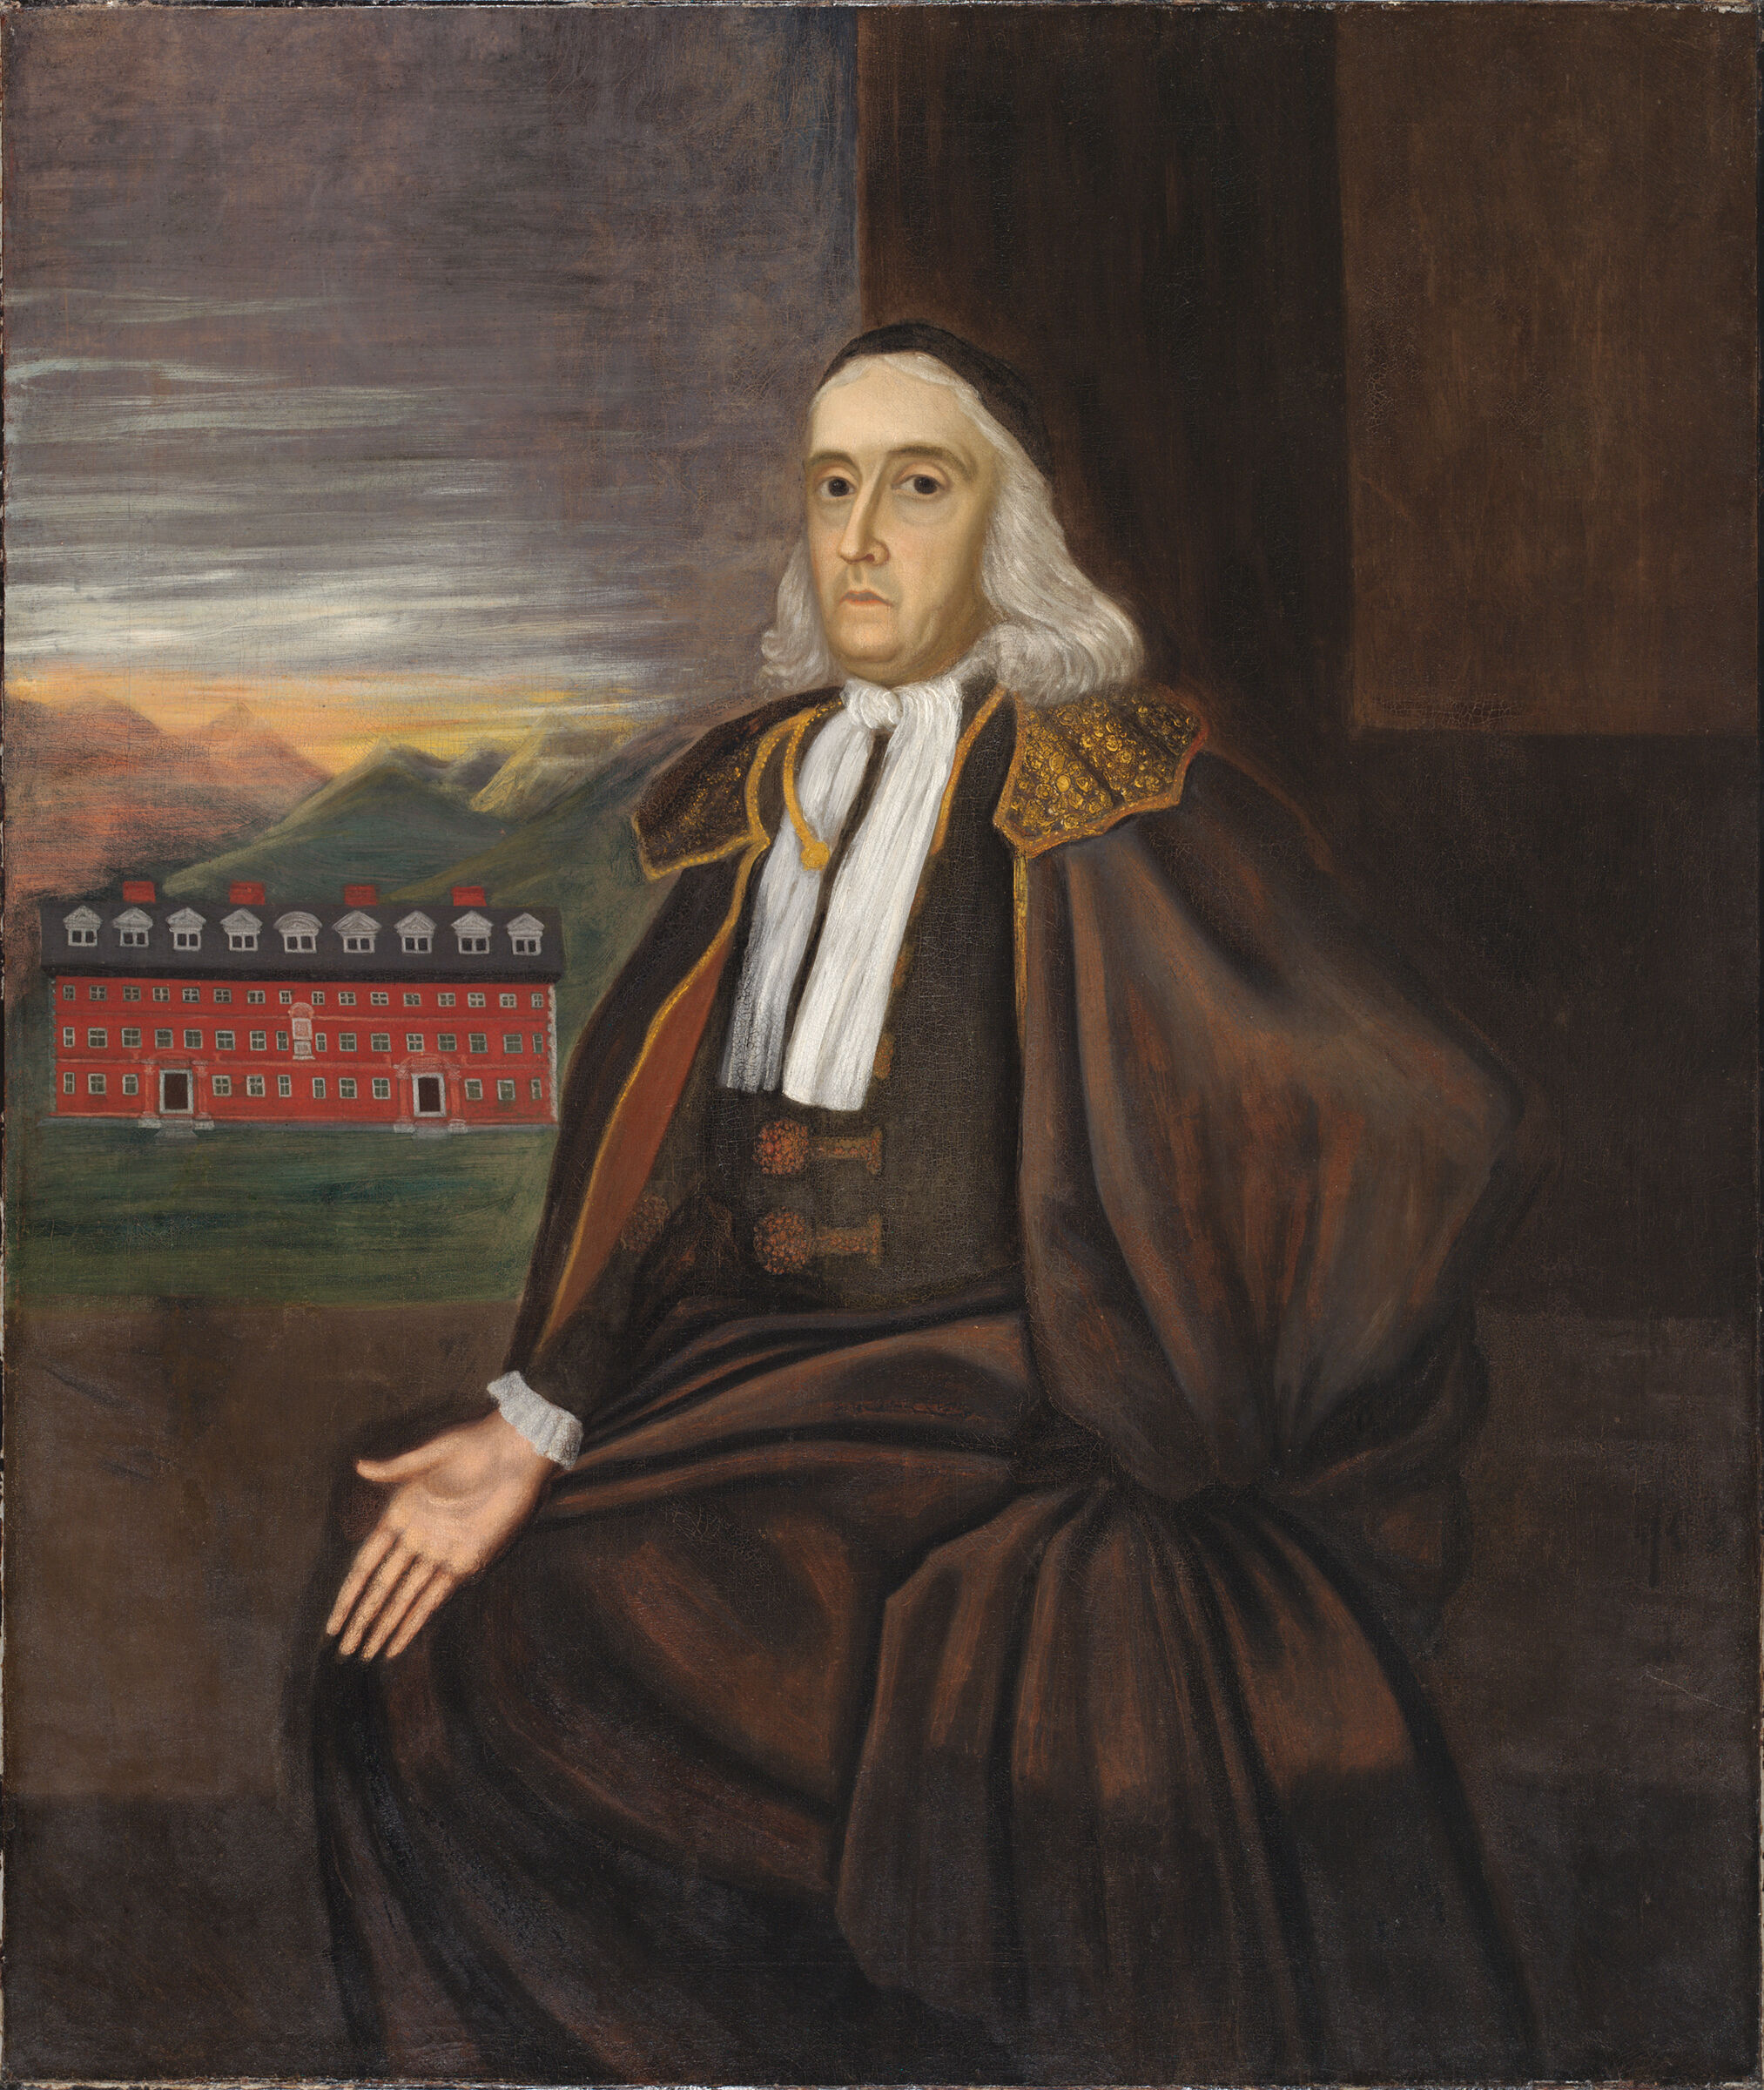 William Stoughton (1631-1701)